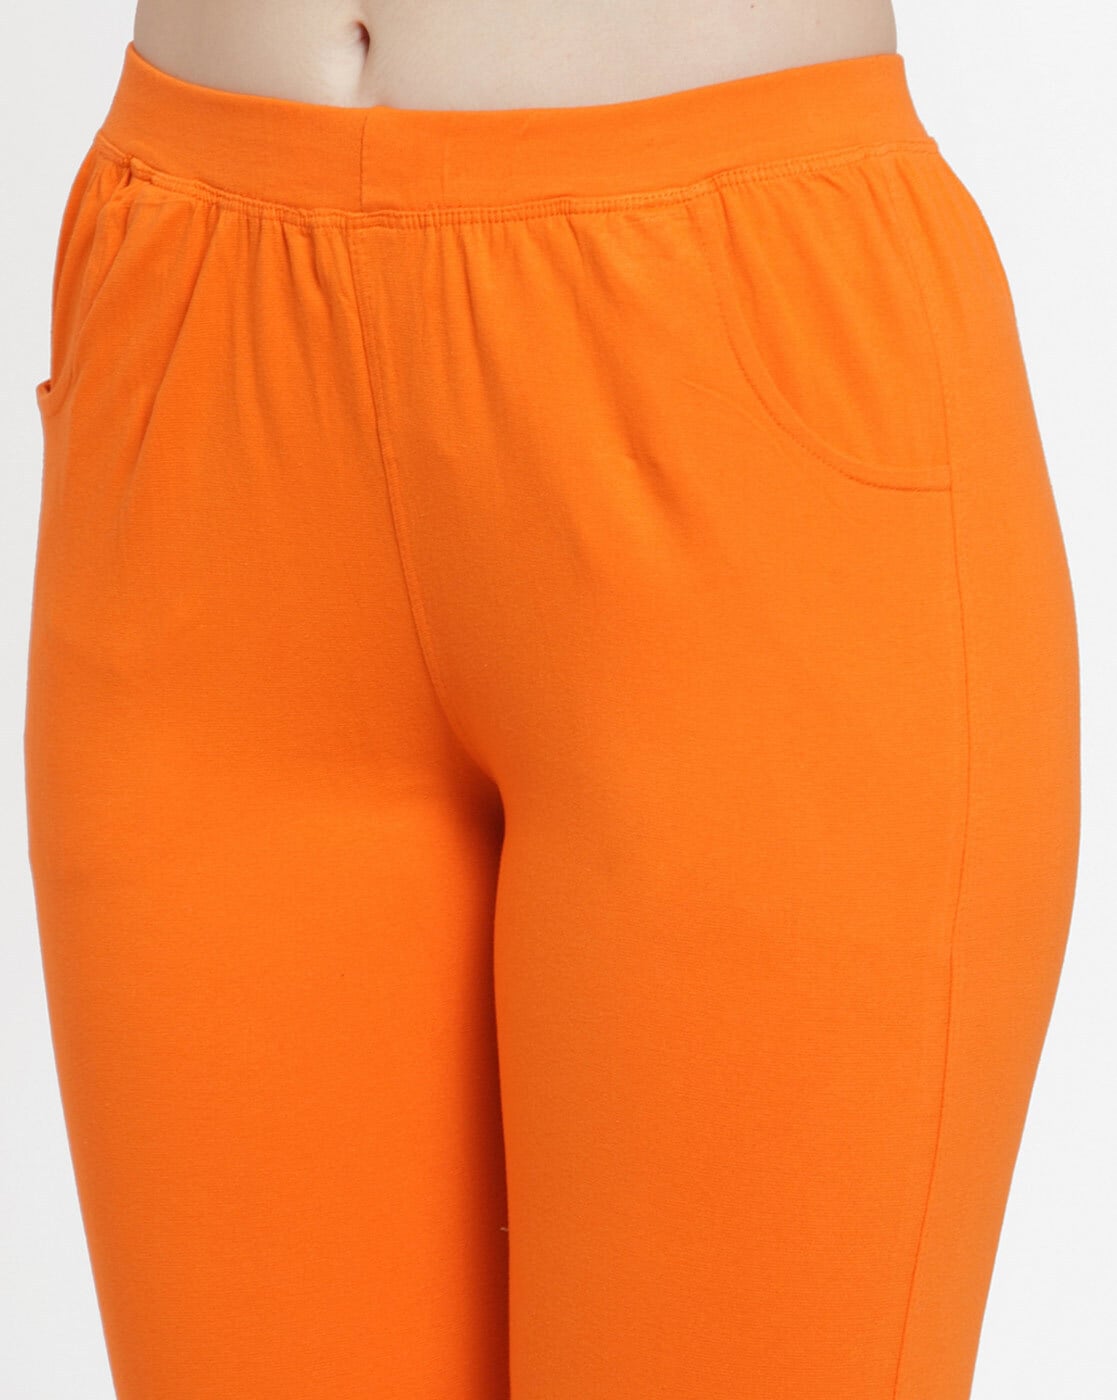 Buy Orange Leggings for Women by TAG 7 Online